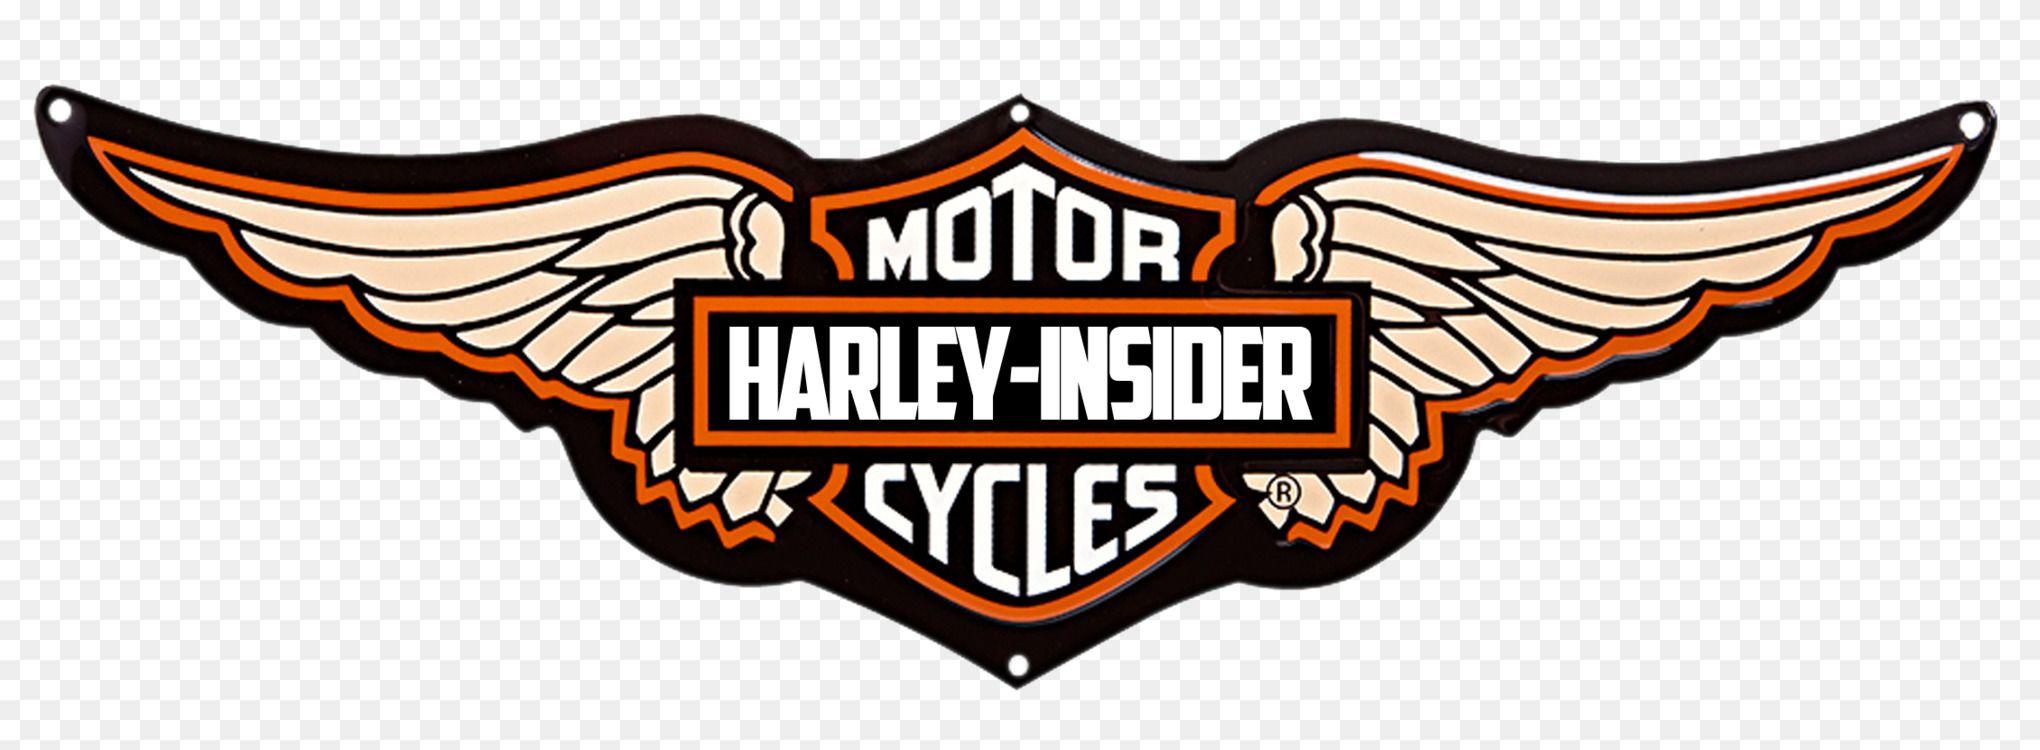 Harley-Davidson Logo - Harley Davidson Sportster Motorcycle Logo Free PNG Image